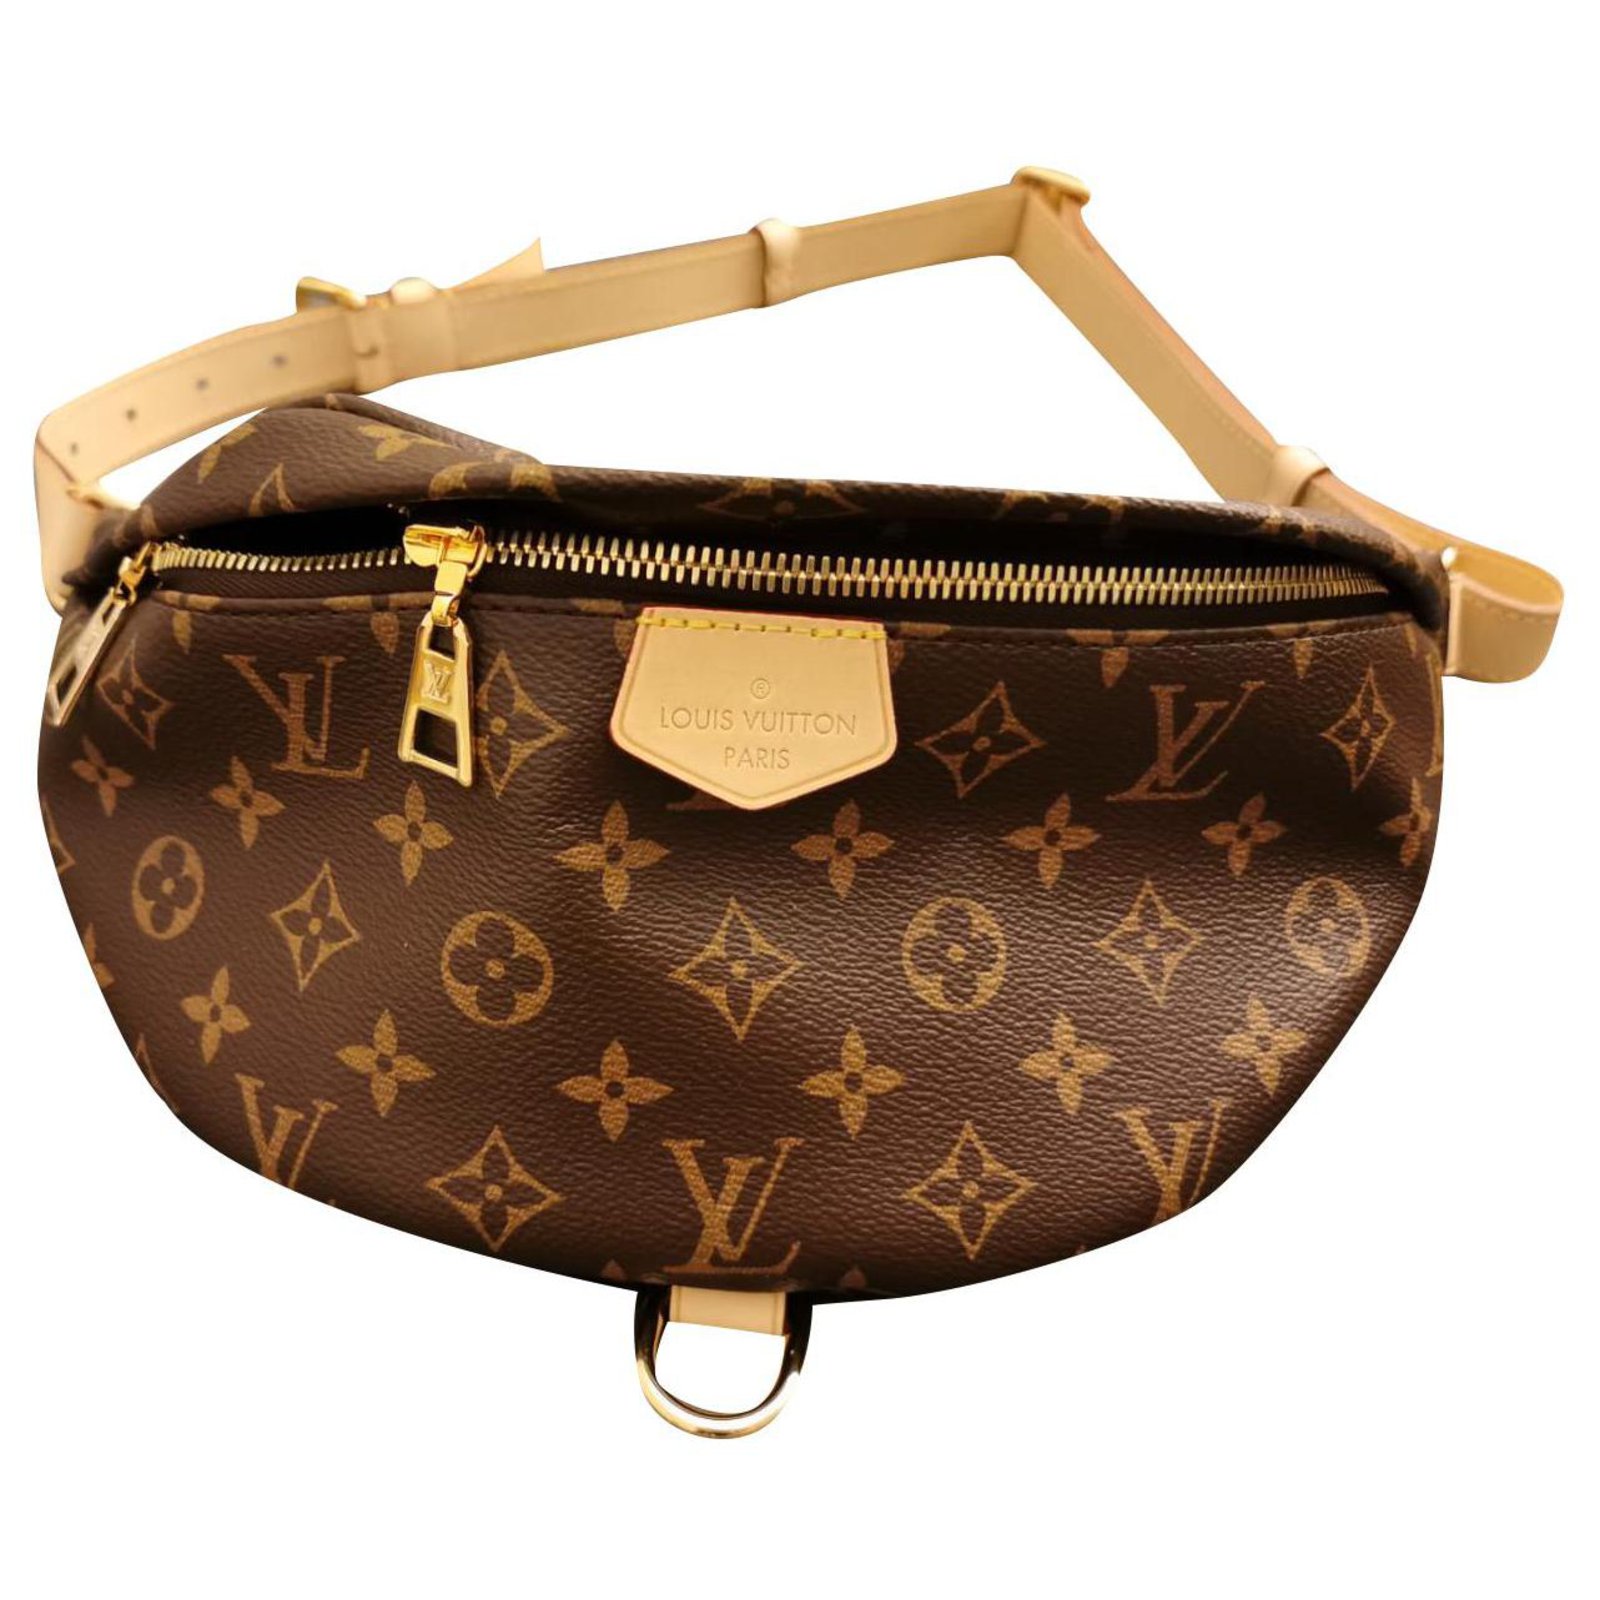 Louis Vuitton Bum Bag Price Euro | Supreme and Everybody